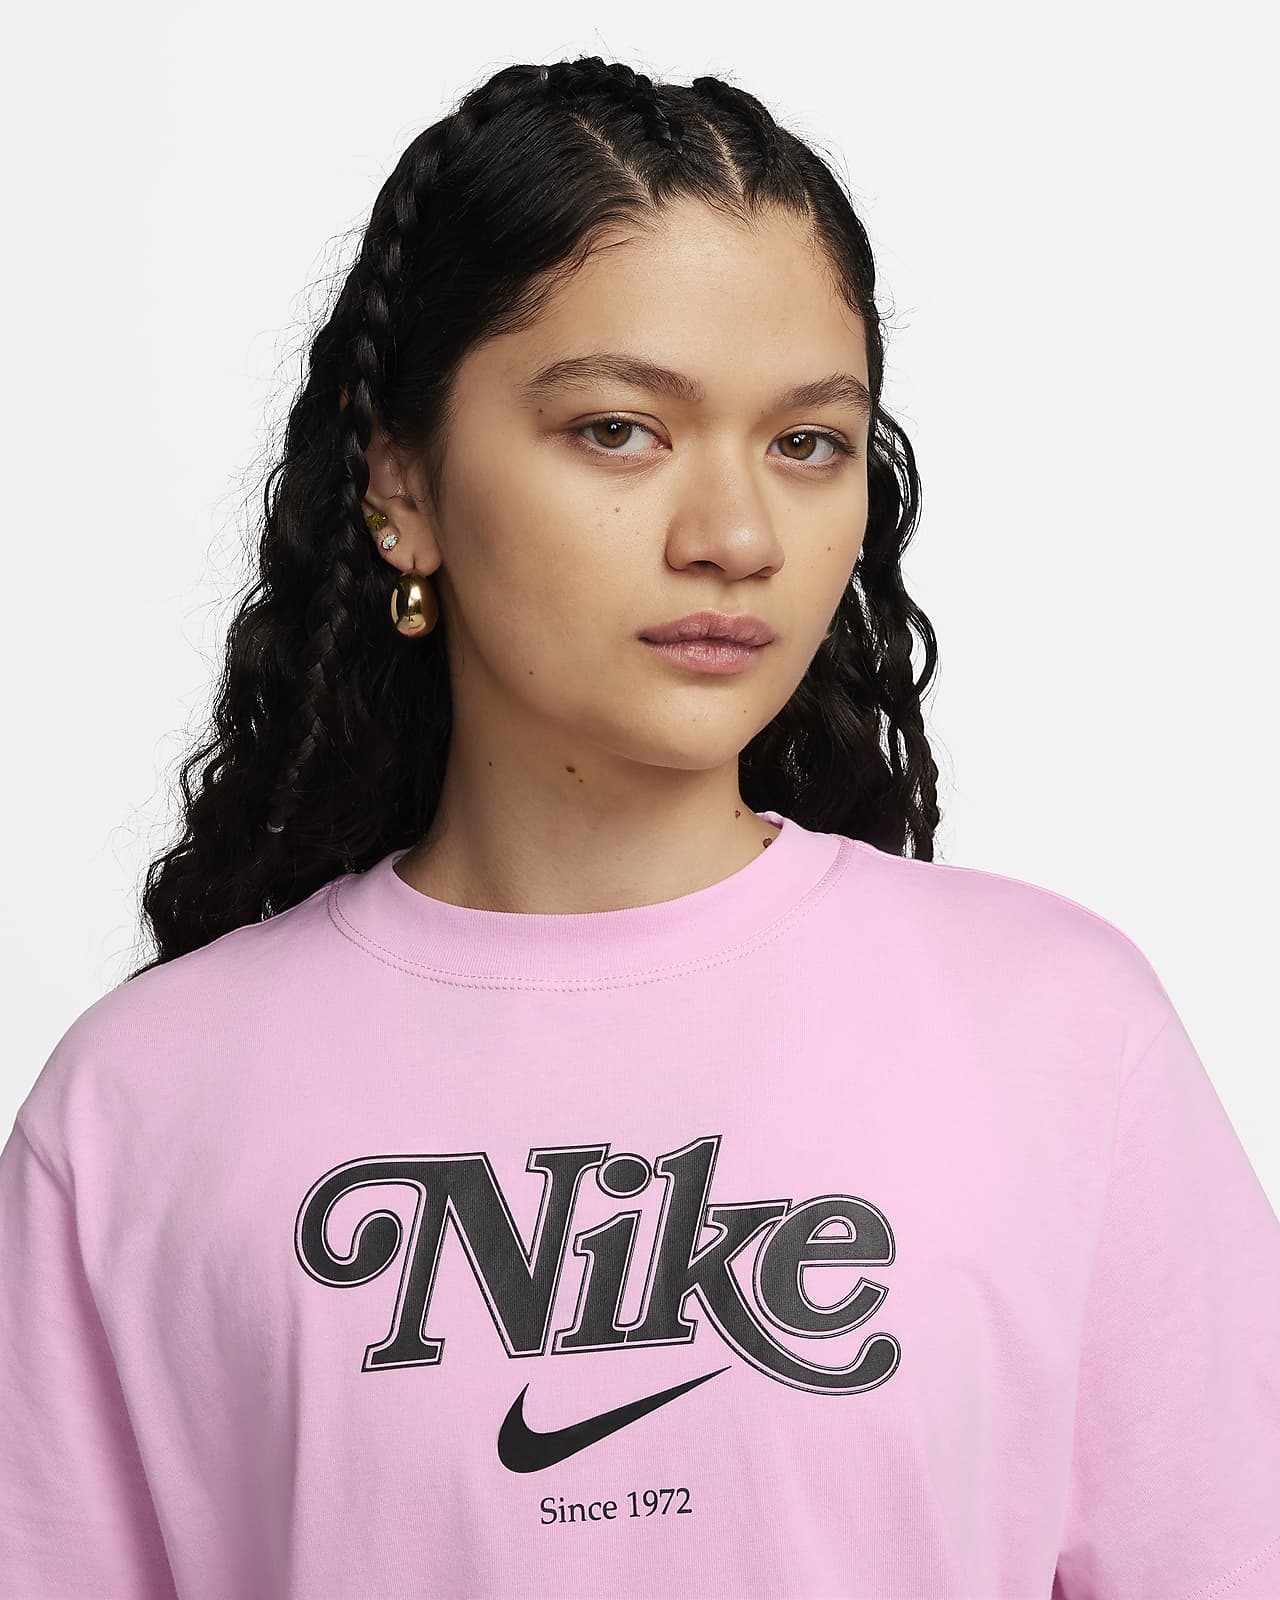 Nike Sportswear Women's T-Shirt. Nike CA